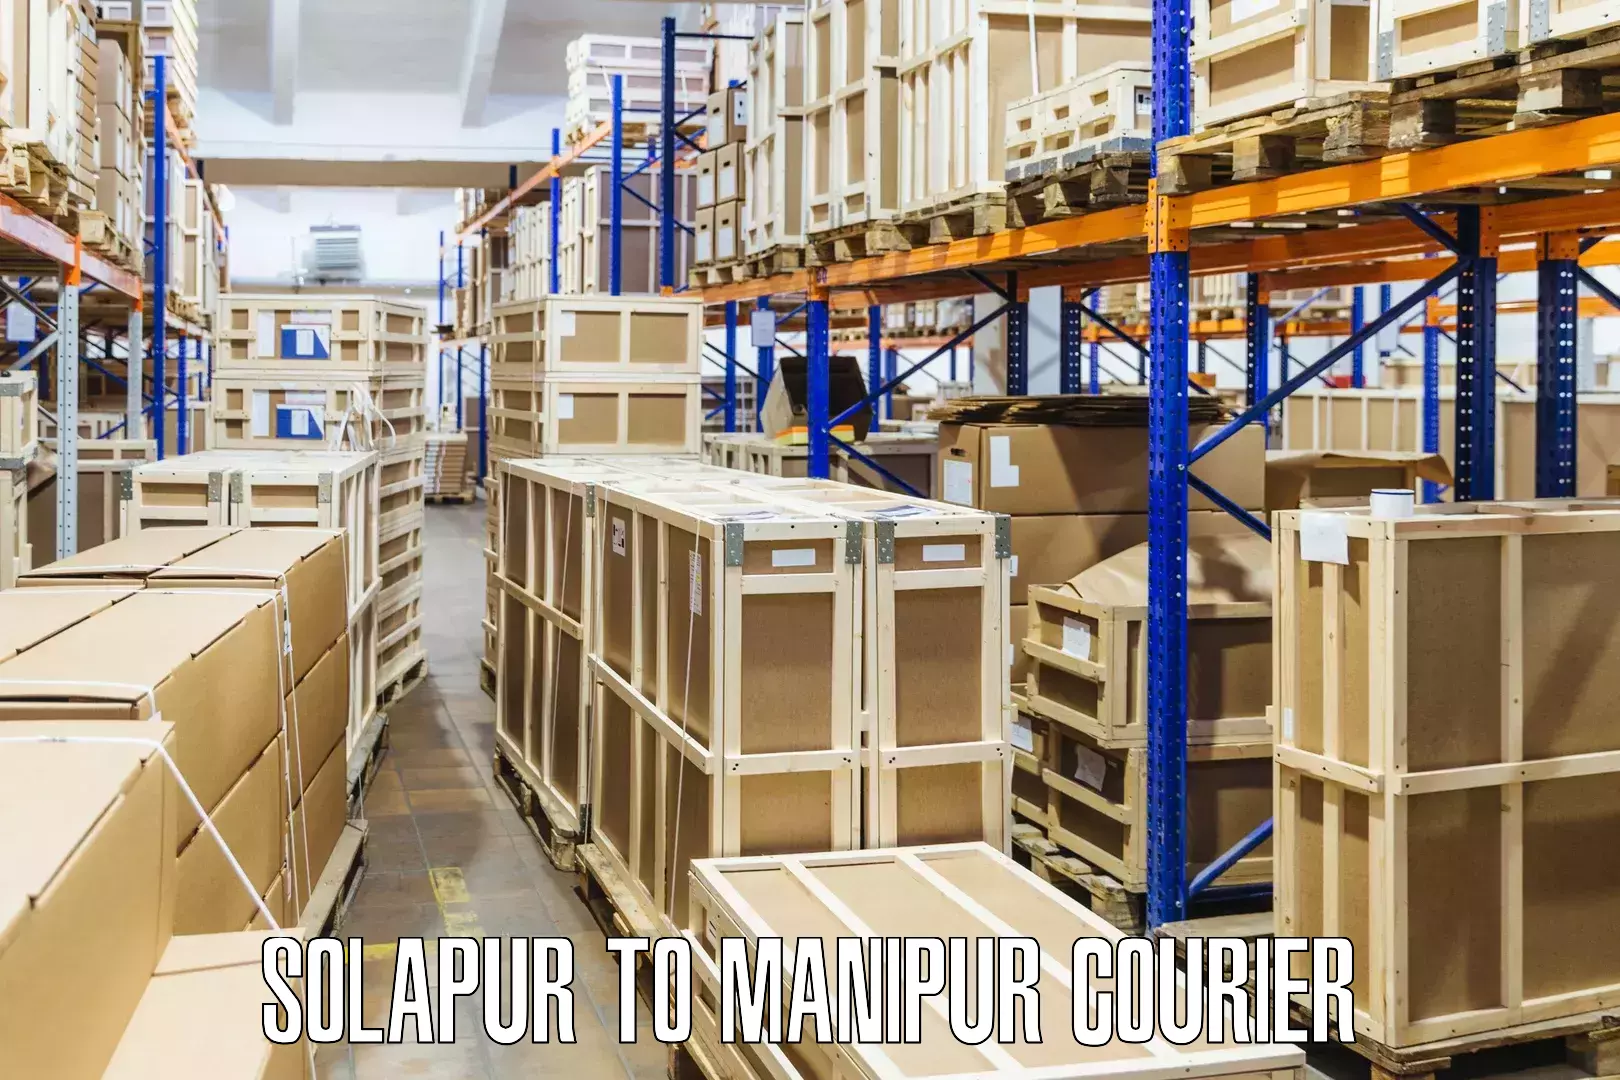 Digital courier platforms Solapur to Chandel